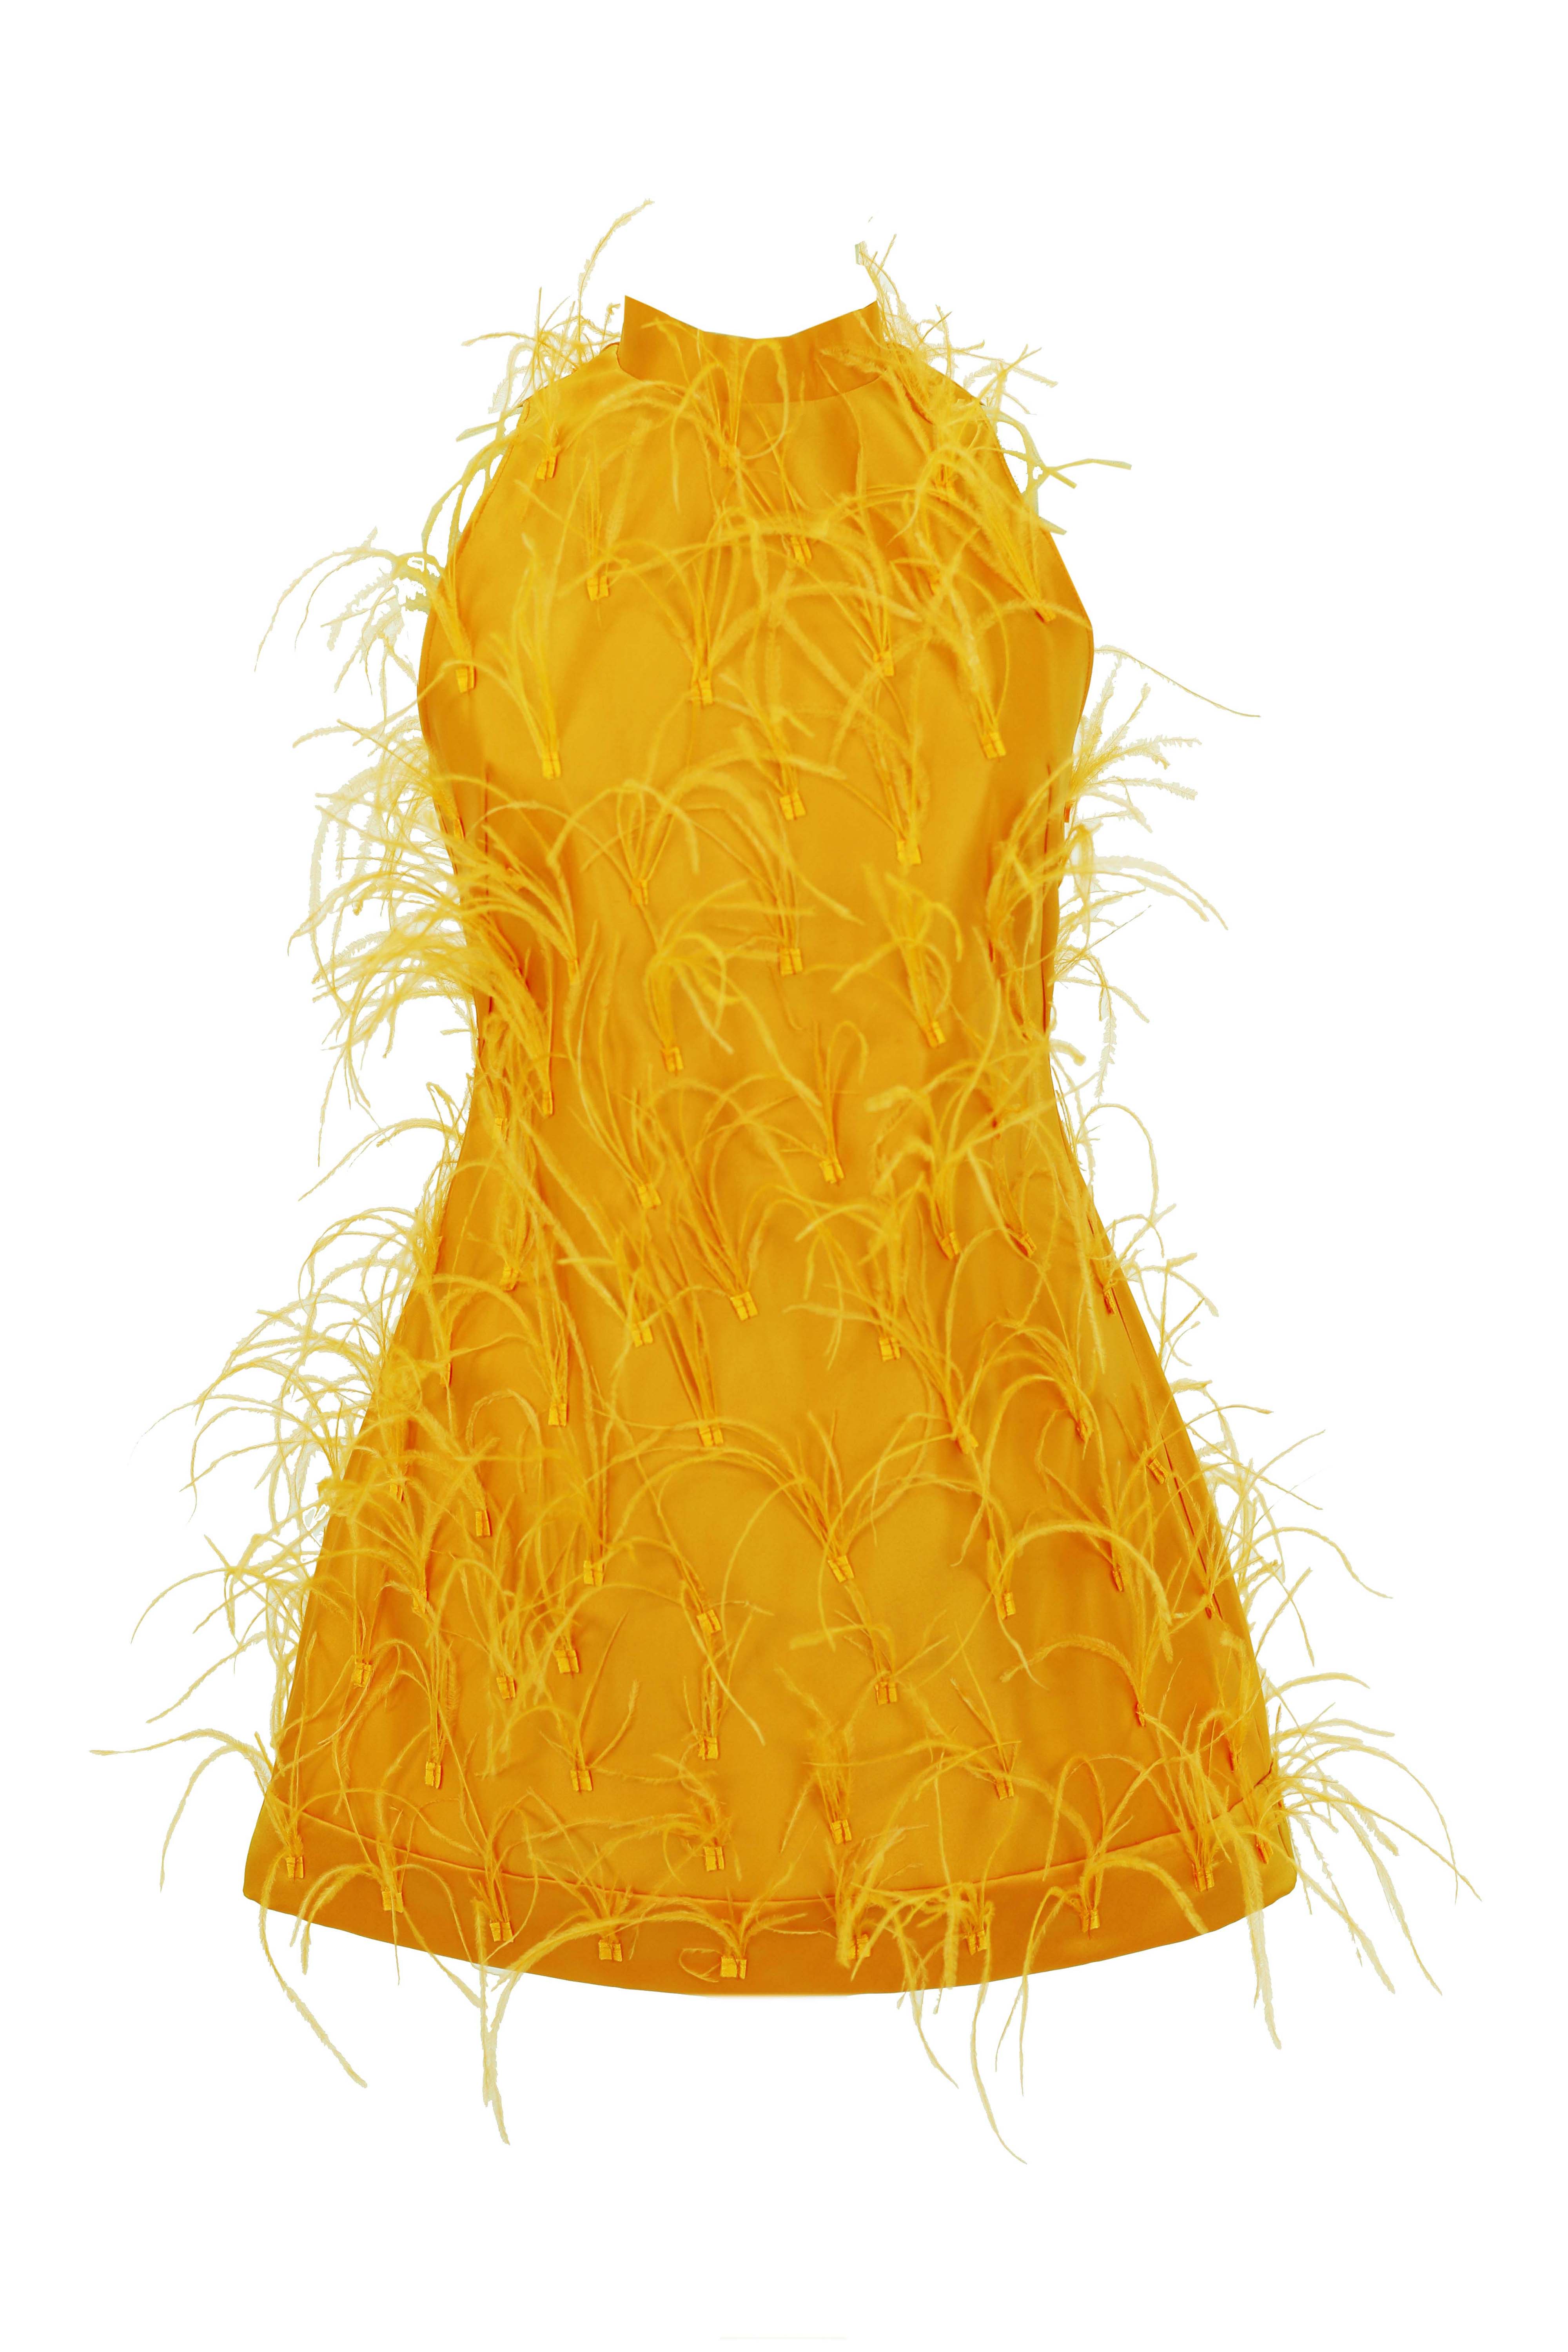 R23101 - OCHRE 01 - ALMEEA ochre yellow mini dress with feathers - AMBAR STUDIO